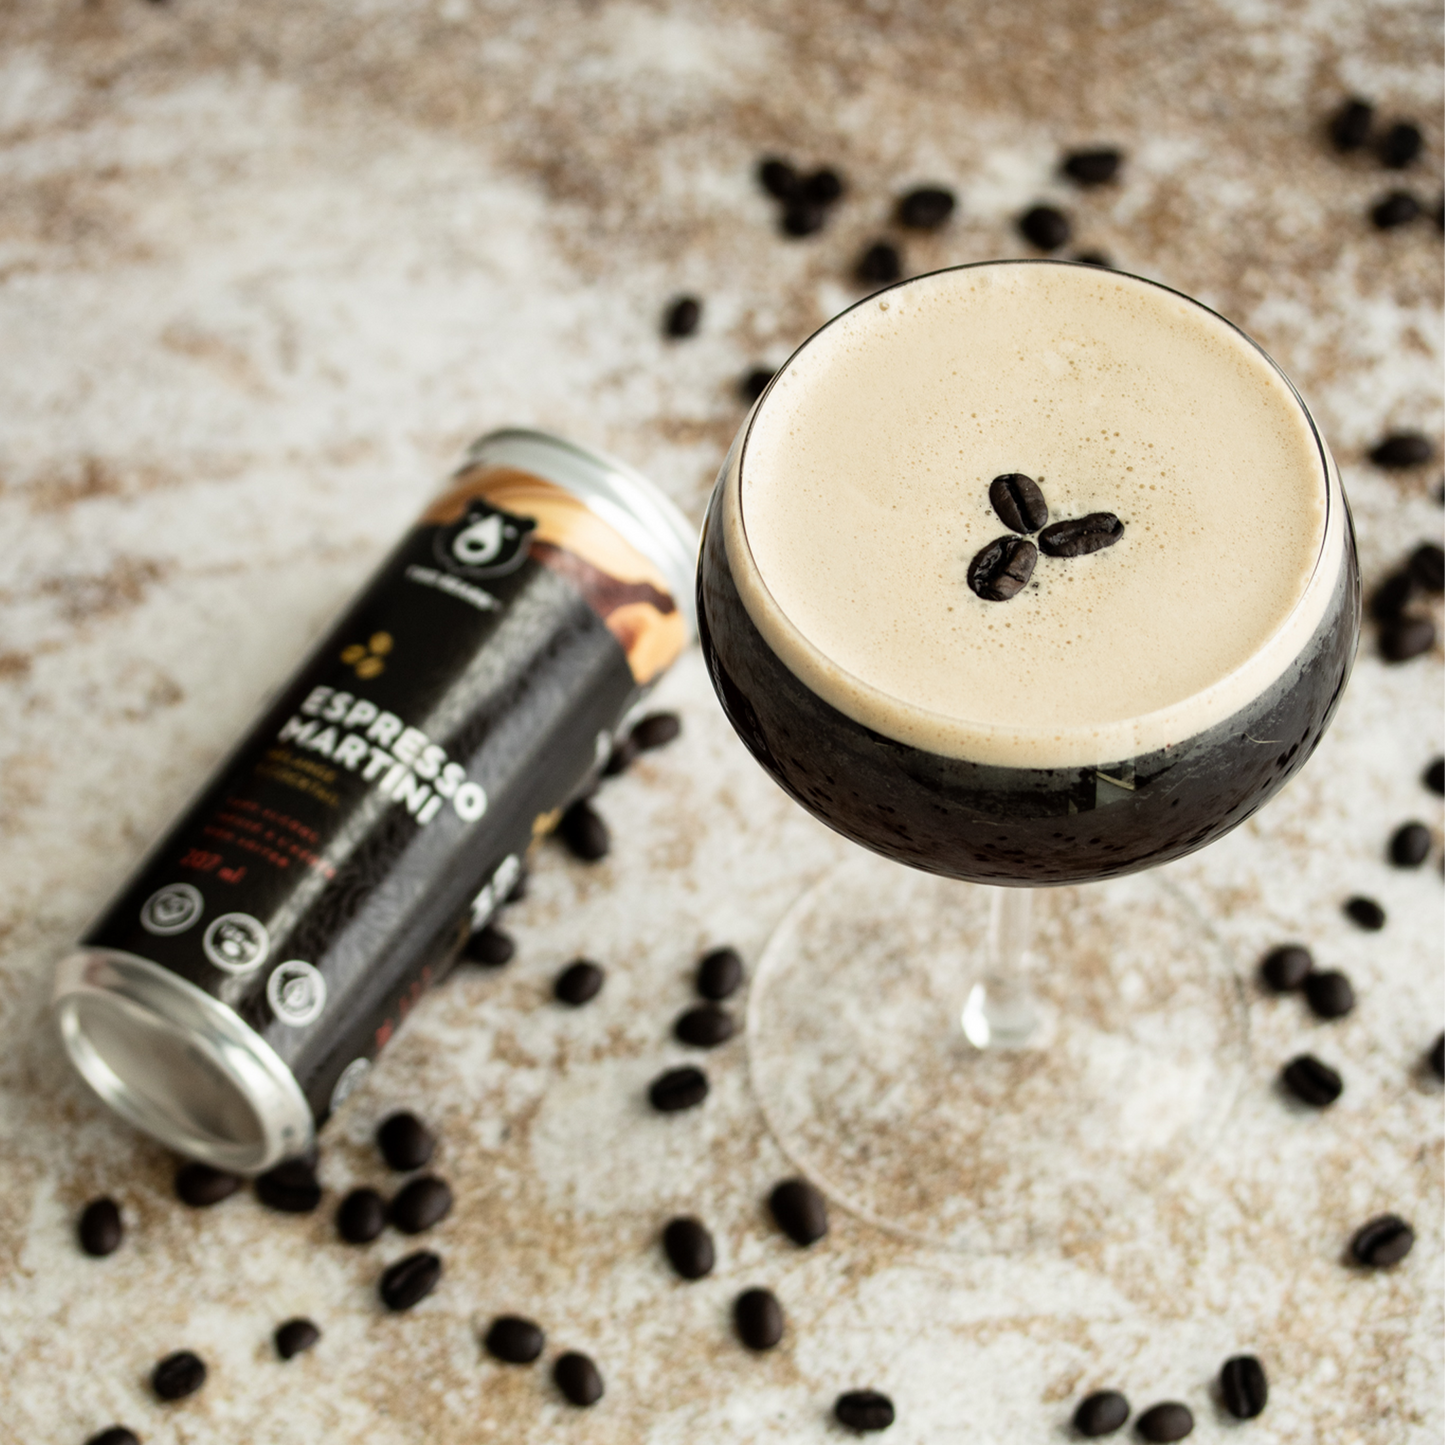 Two Bears - Espresso Martini Mixer (4 Pack) –